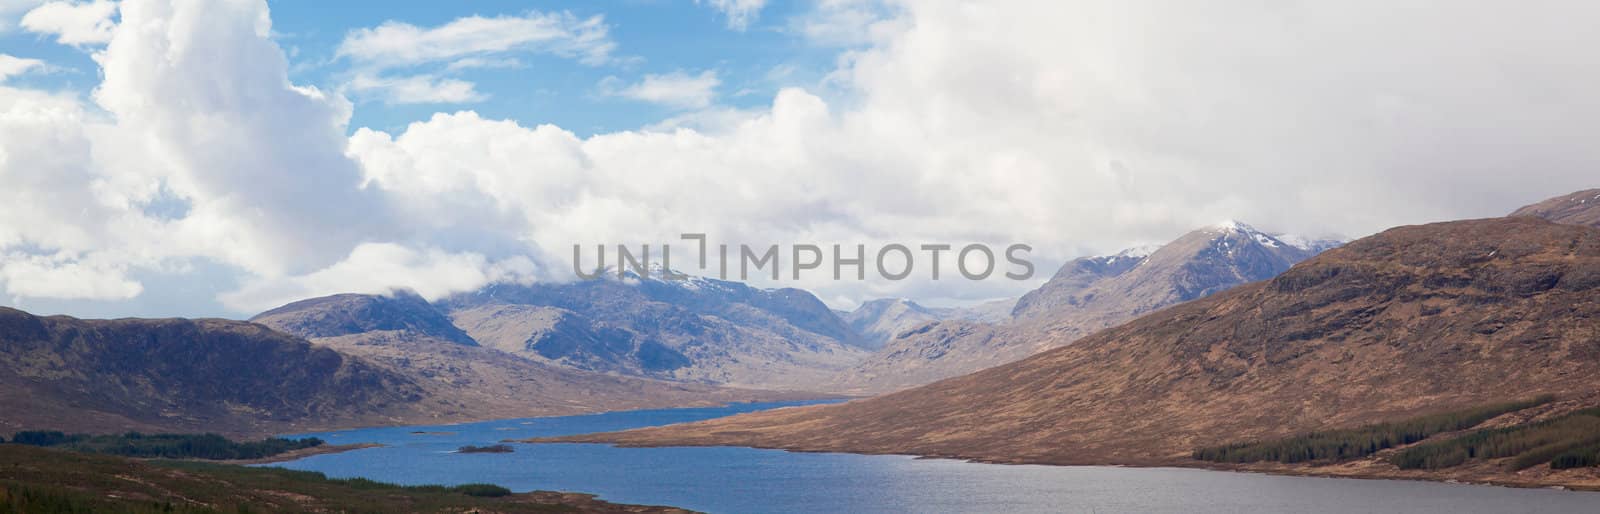 Panorama Snow Mountain range and lake Landscape at Scotland Highland area